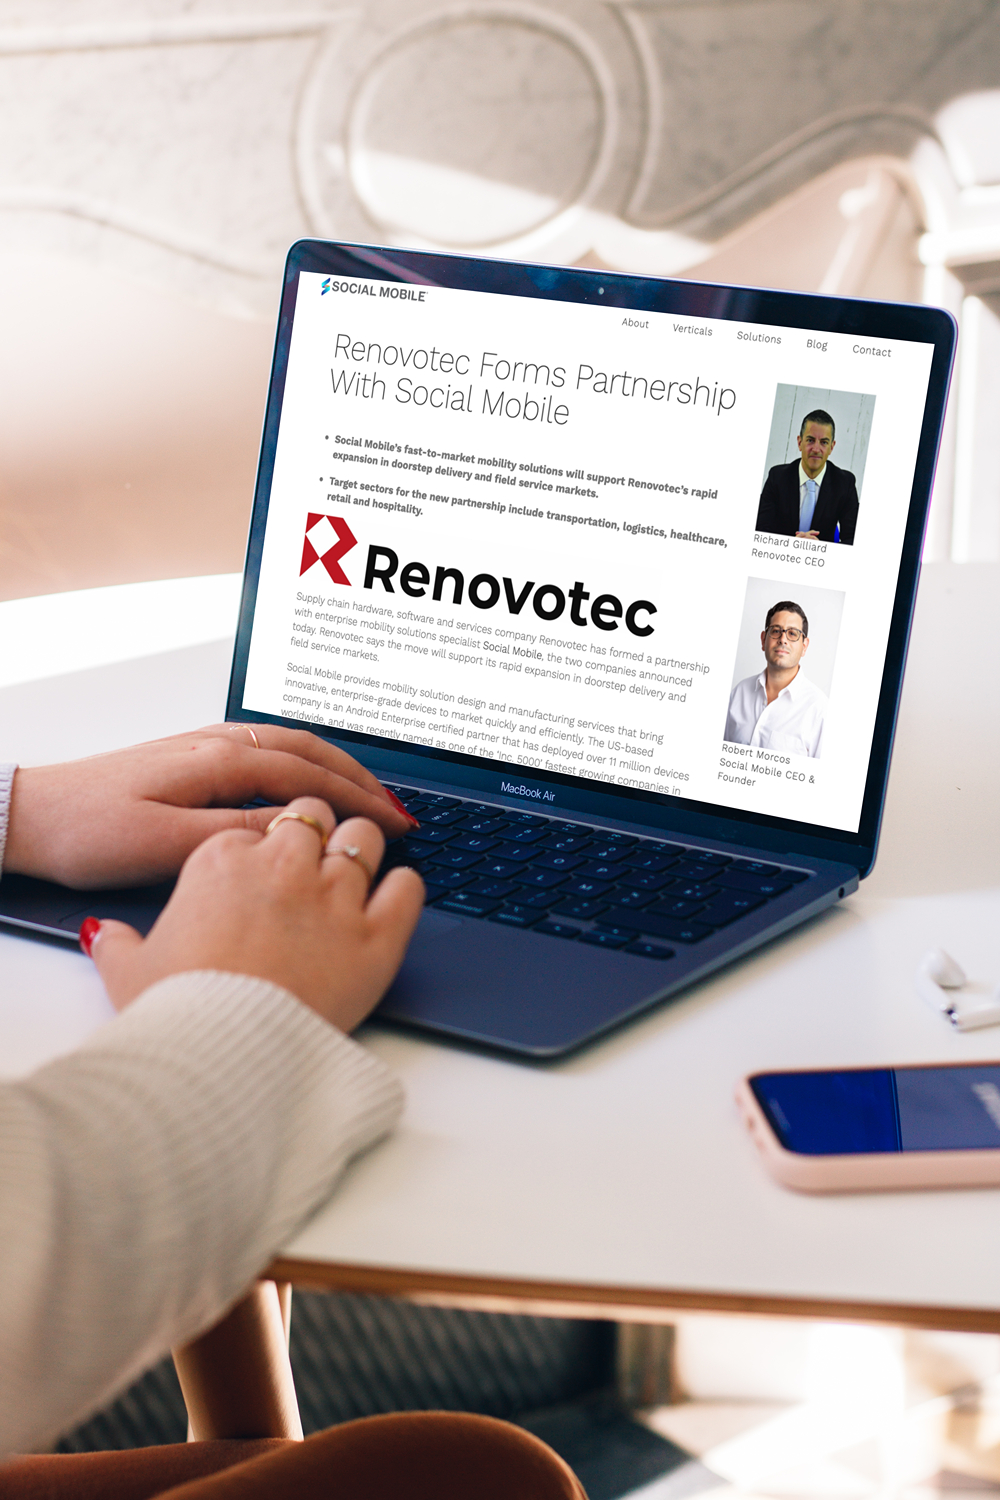 Renovotec Forms Partnership With Social Mobile